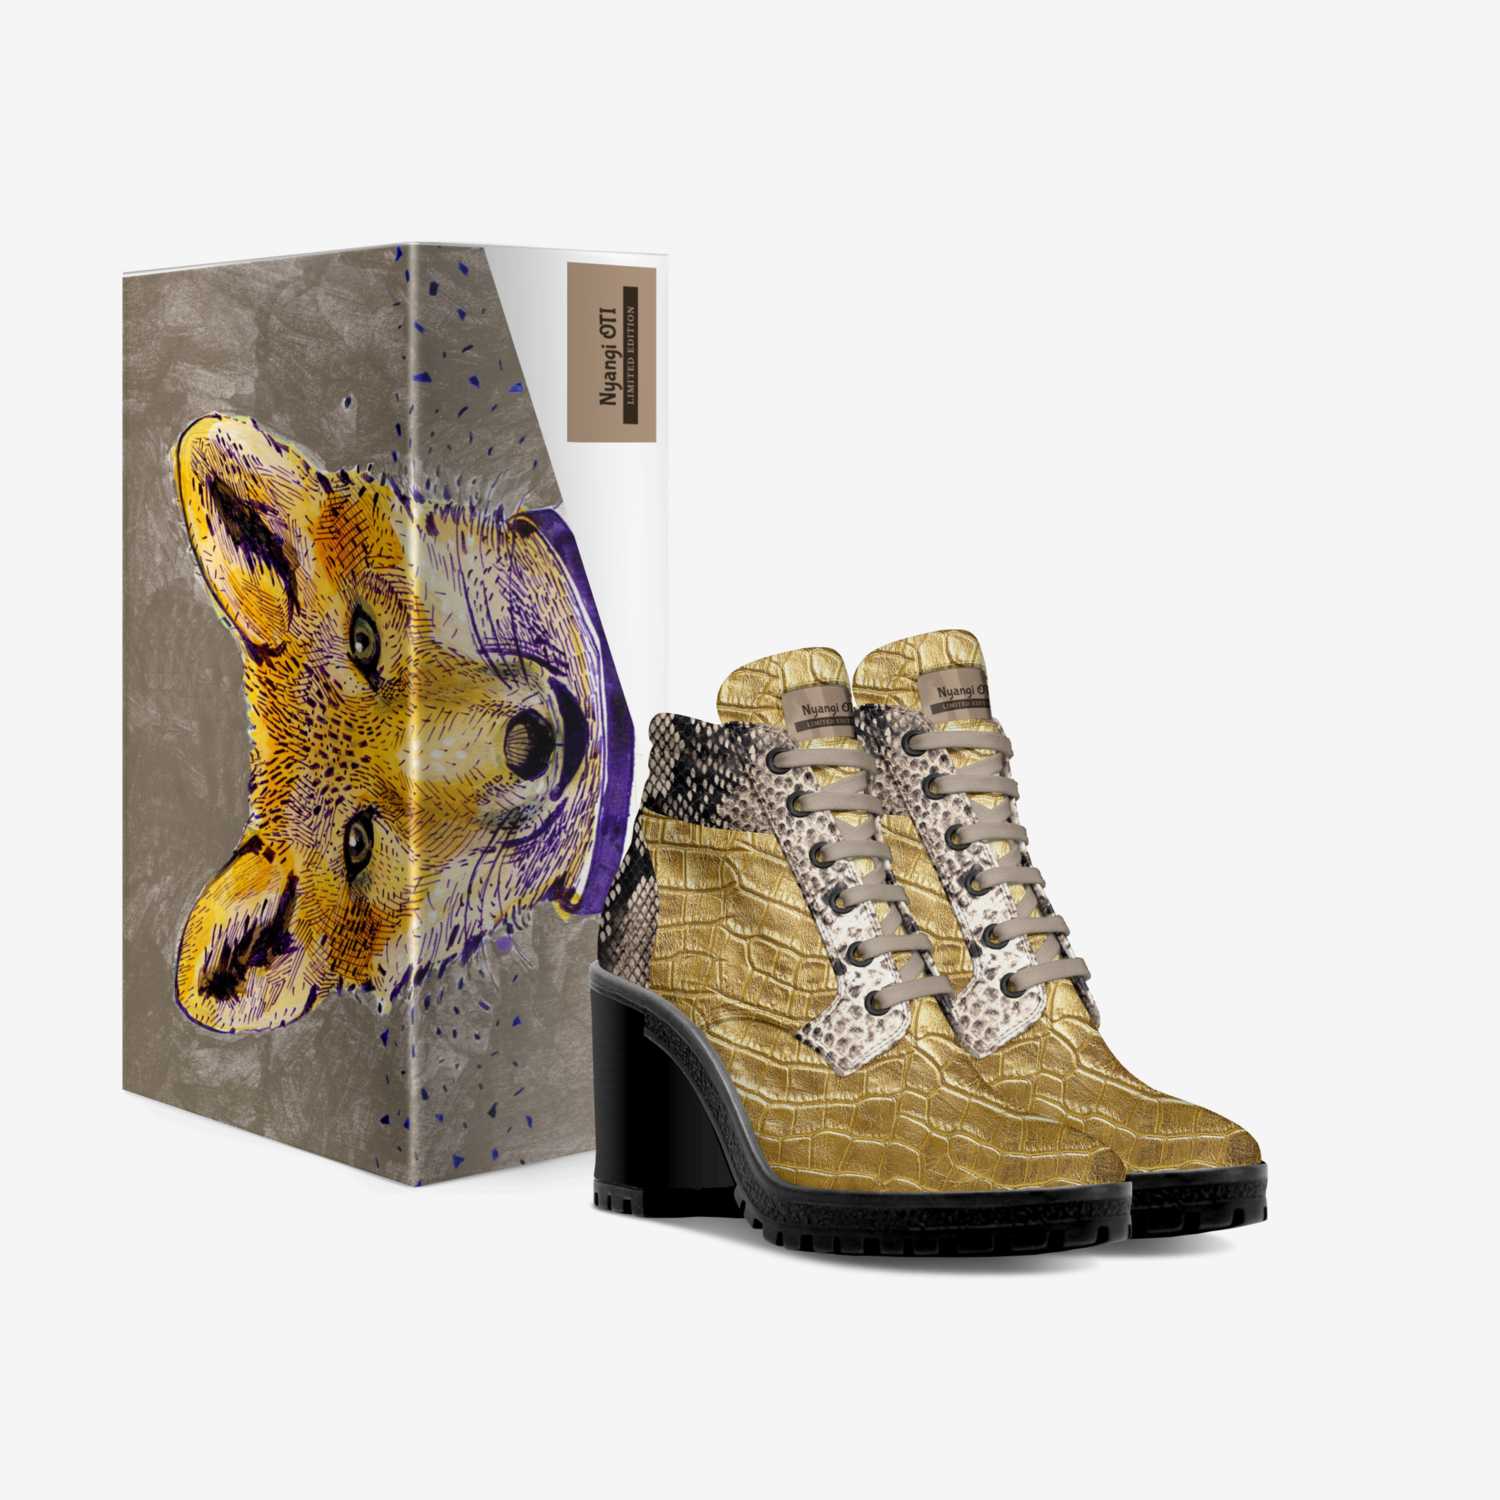 Nyangi OTI  custom made in Italy shoes by Amy Otieno | Box view